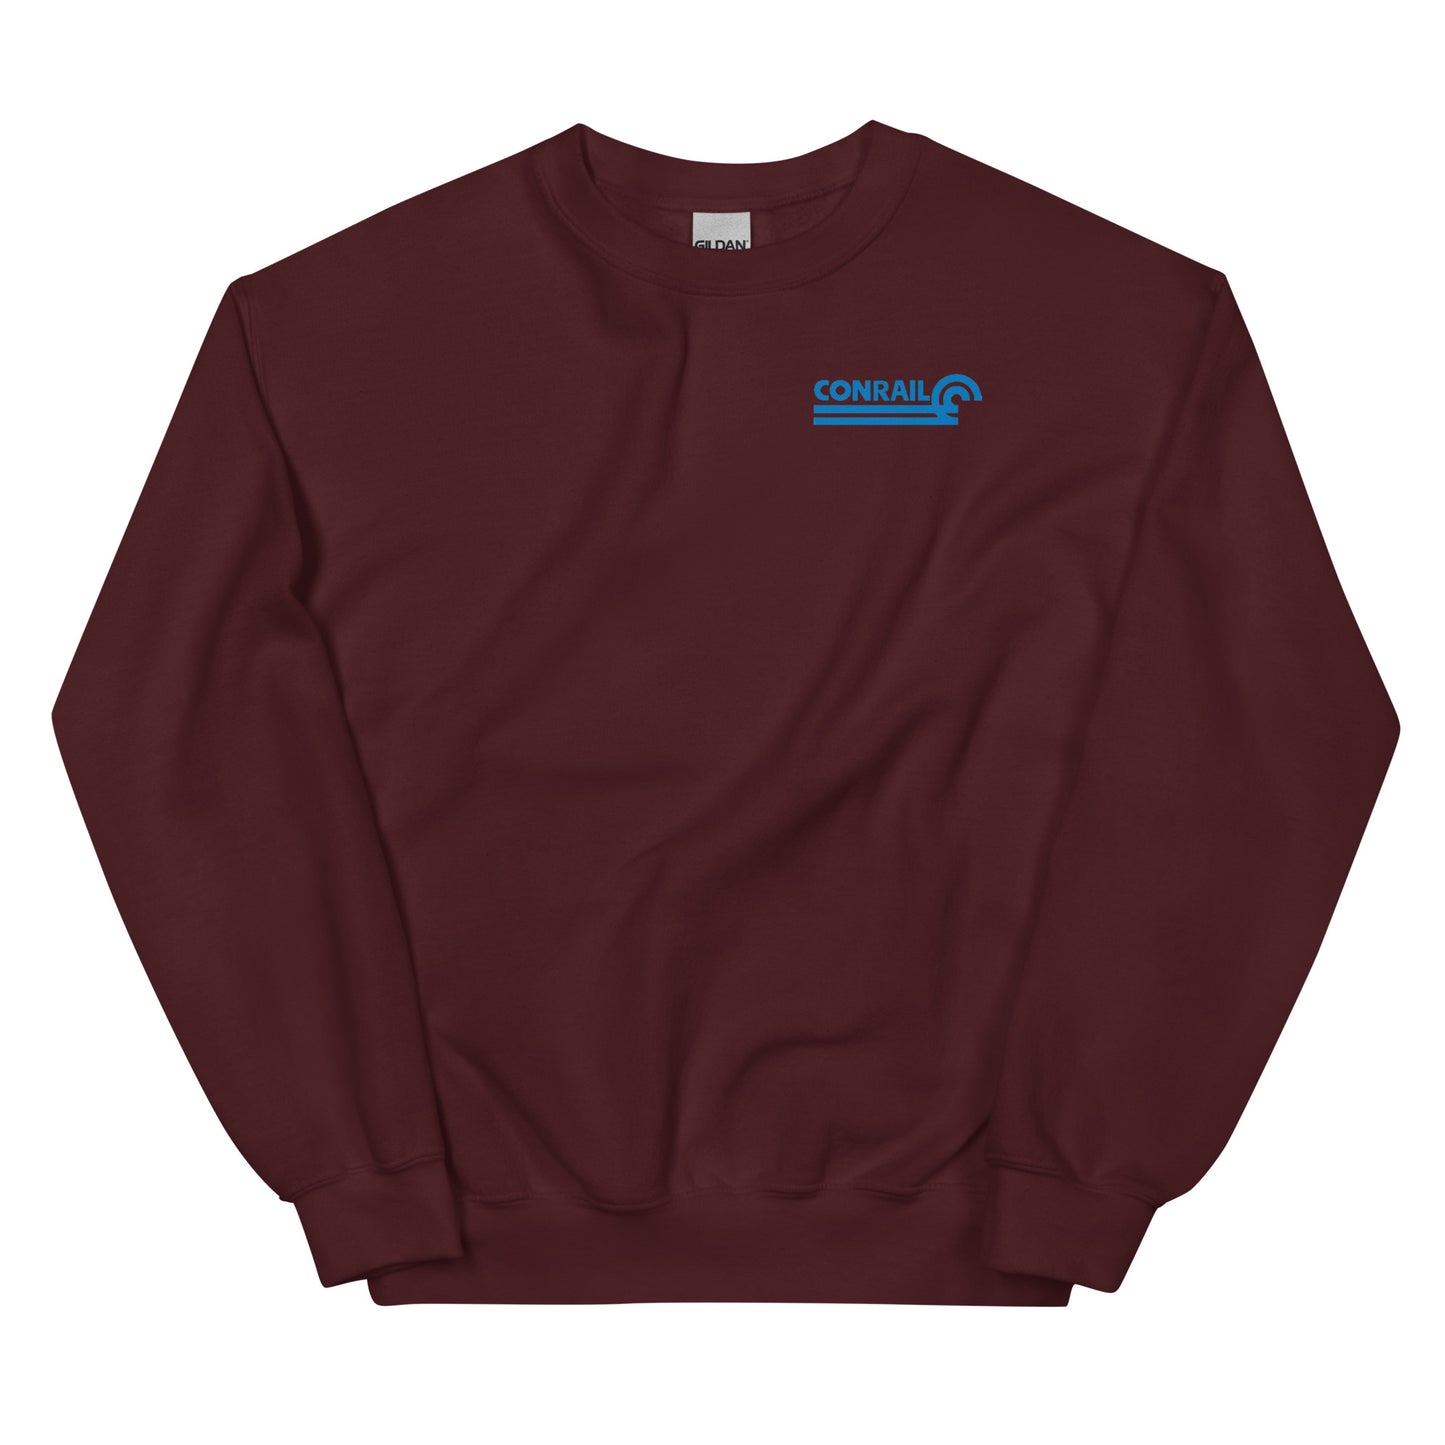 Conrail Unisex Crewneck Sweatshirt